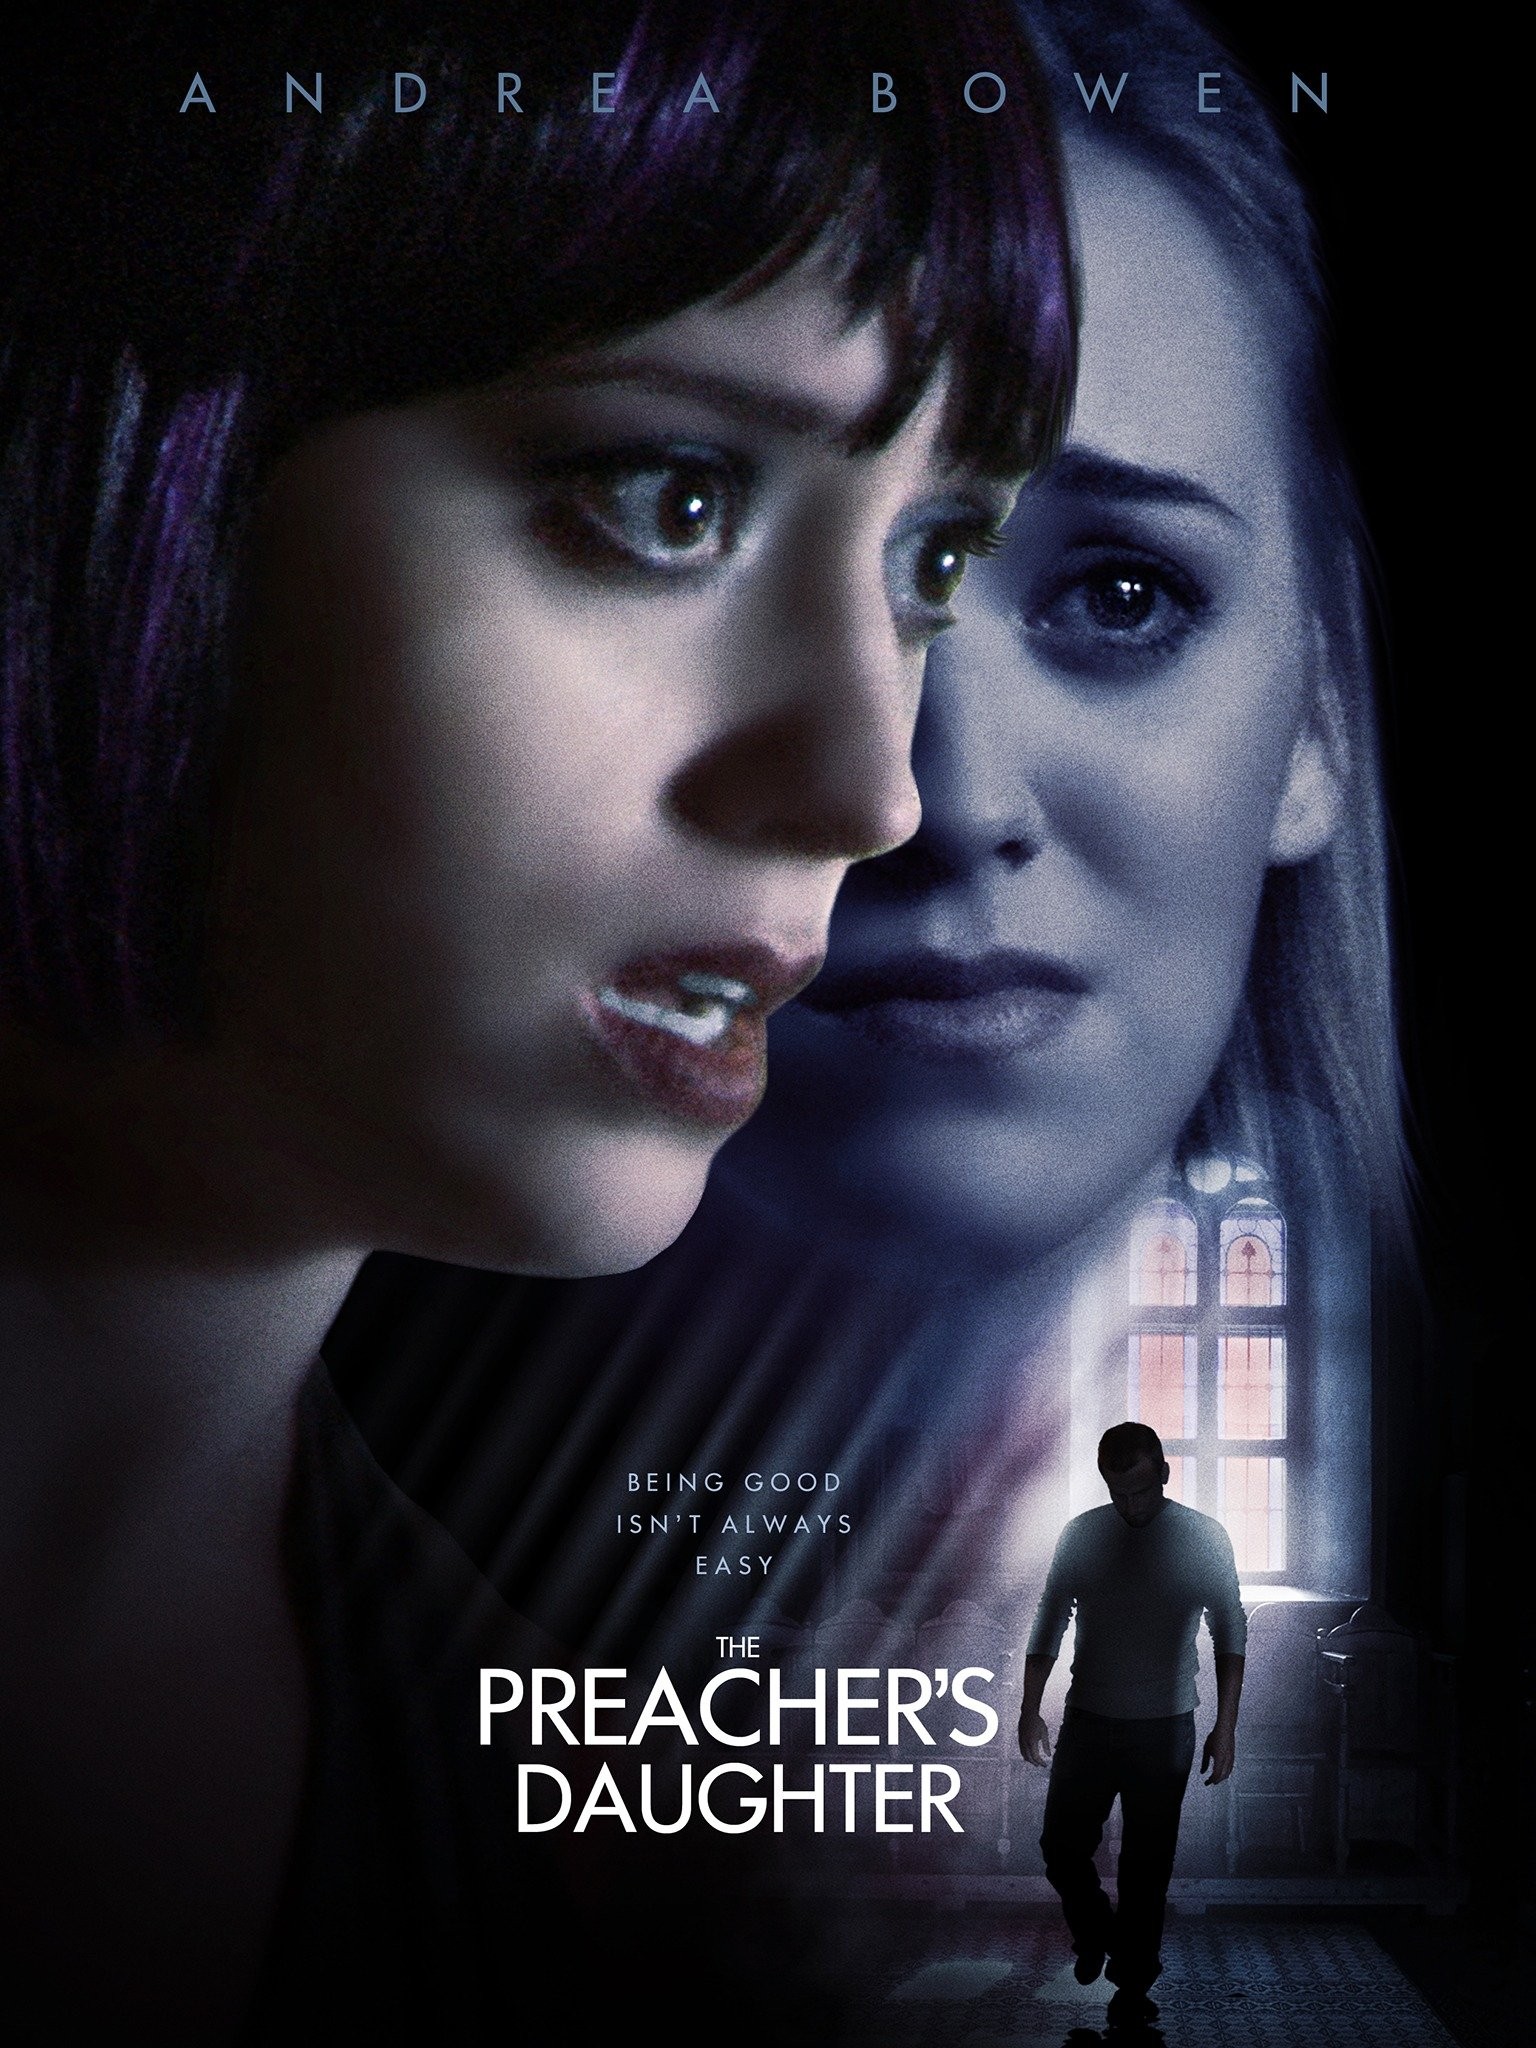 The preacher's daughter movie